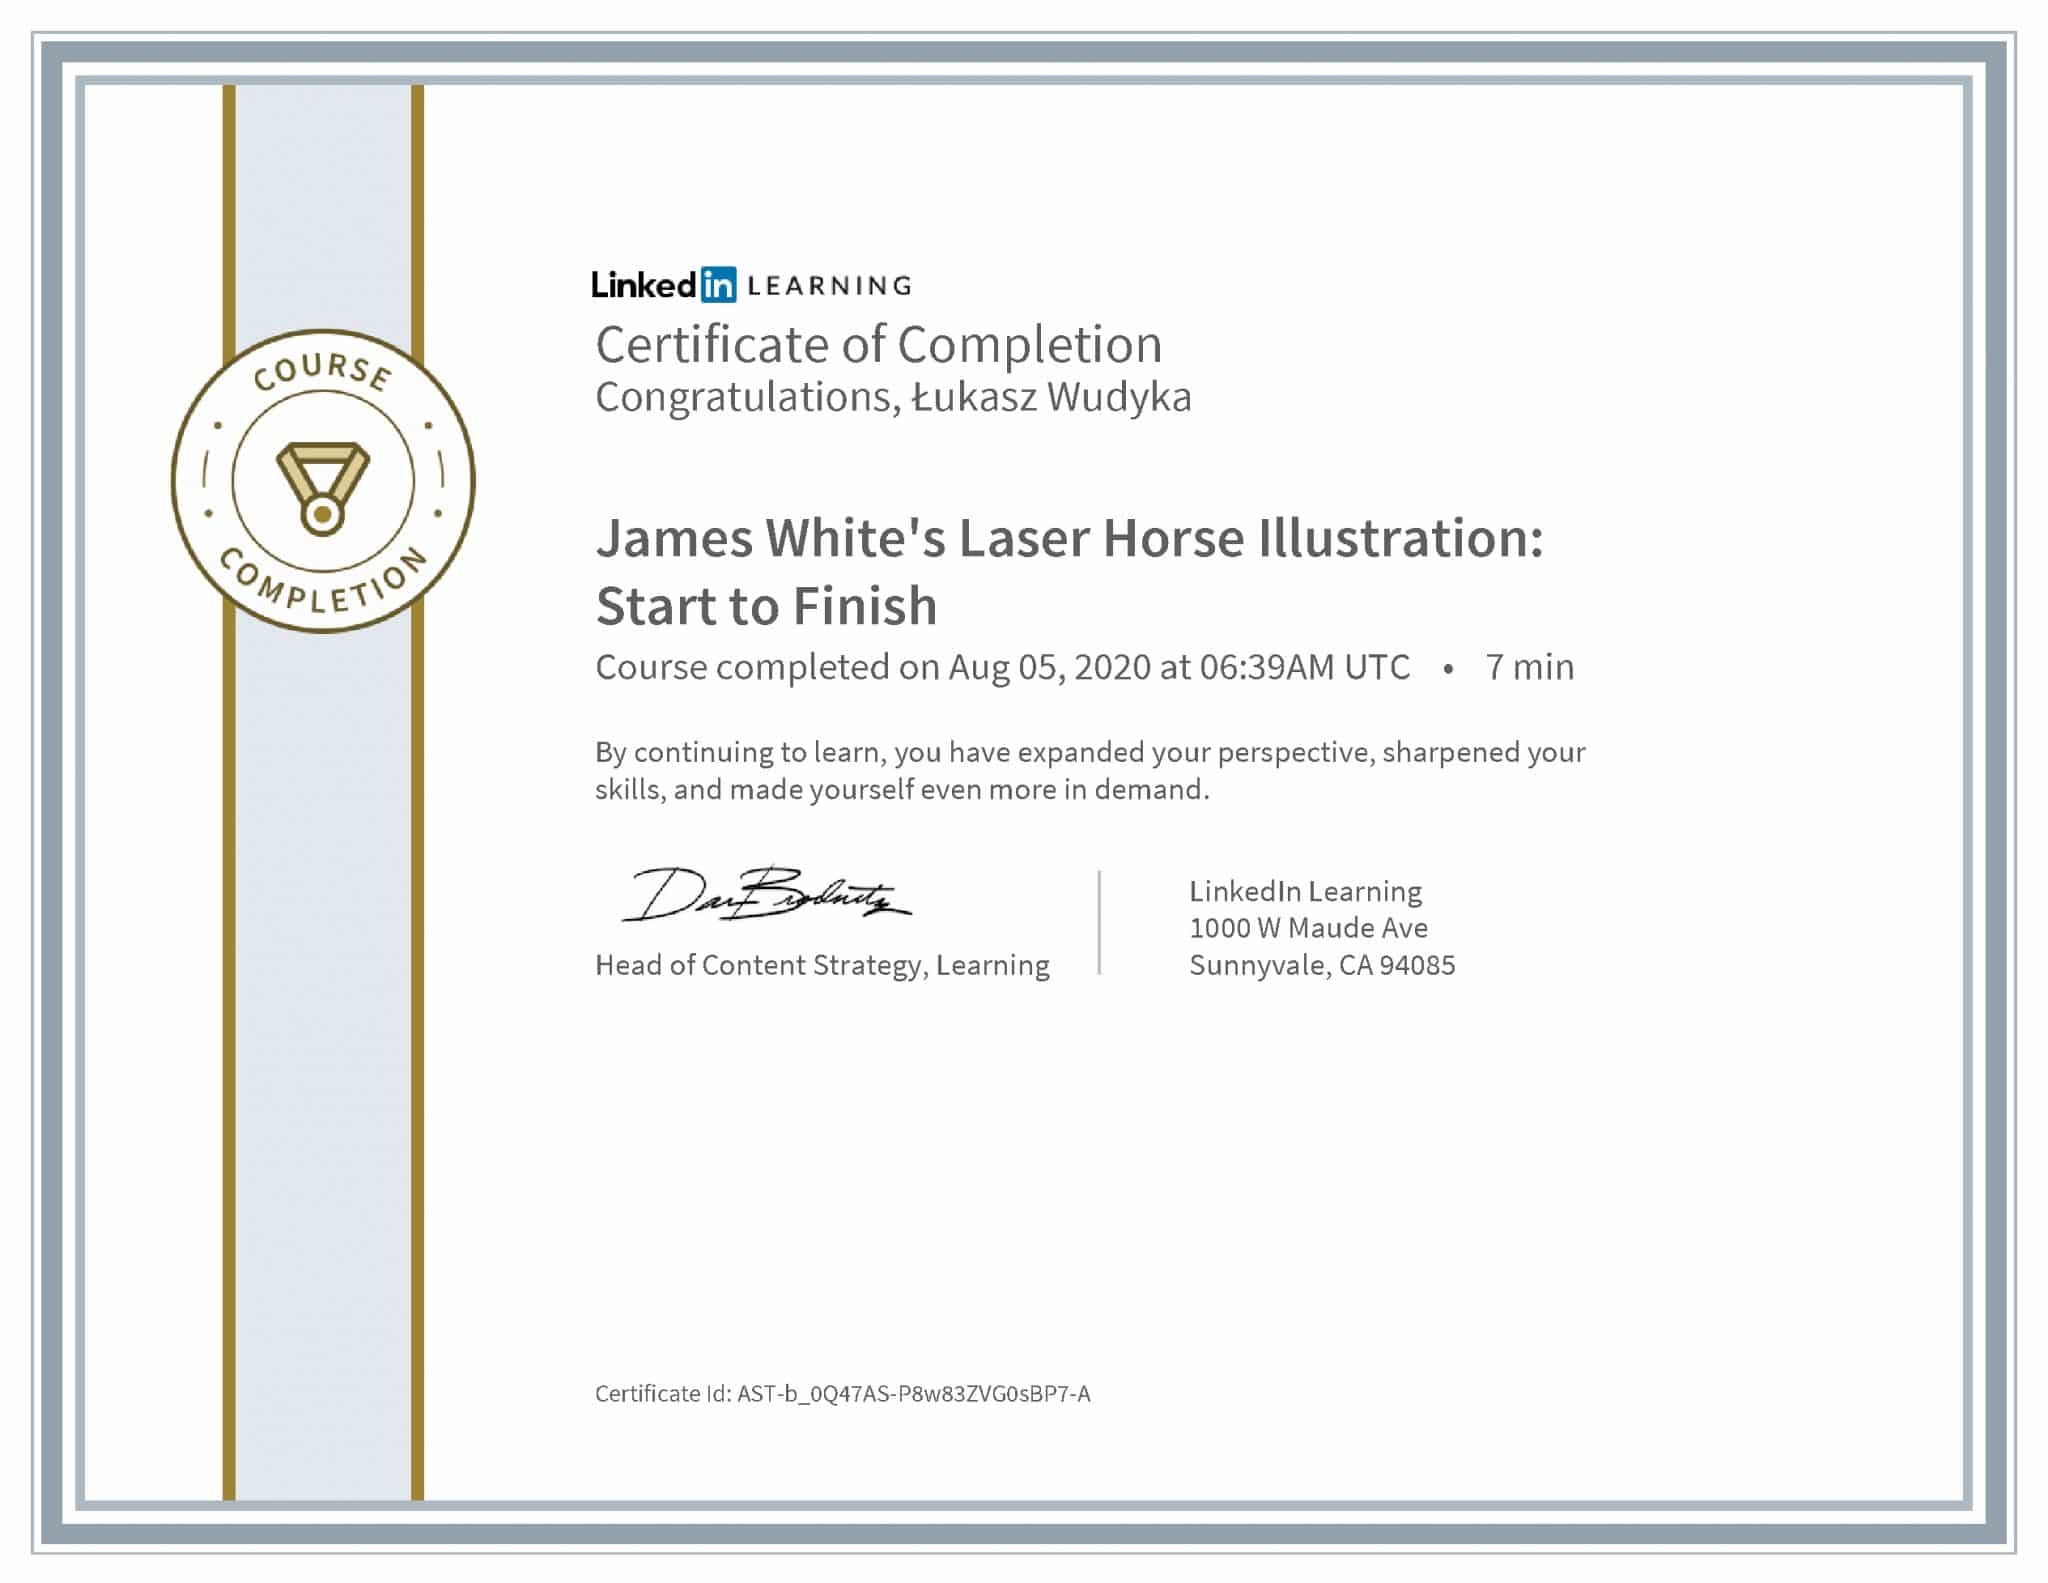 Łukasz Wudyka certyfikat LinkedIn James White's Laser Horse Illustration: Start to Finish